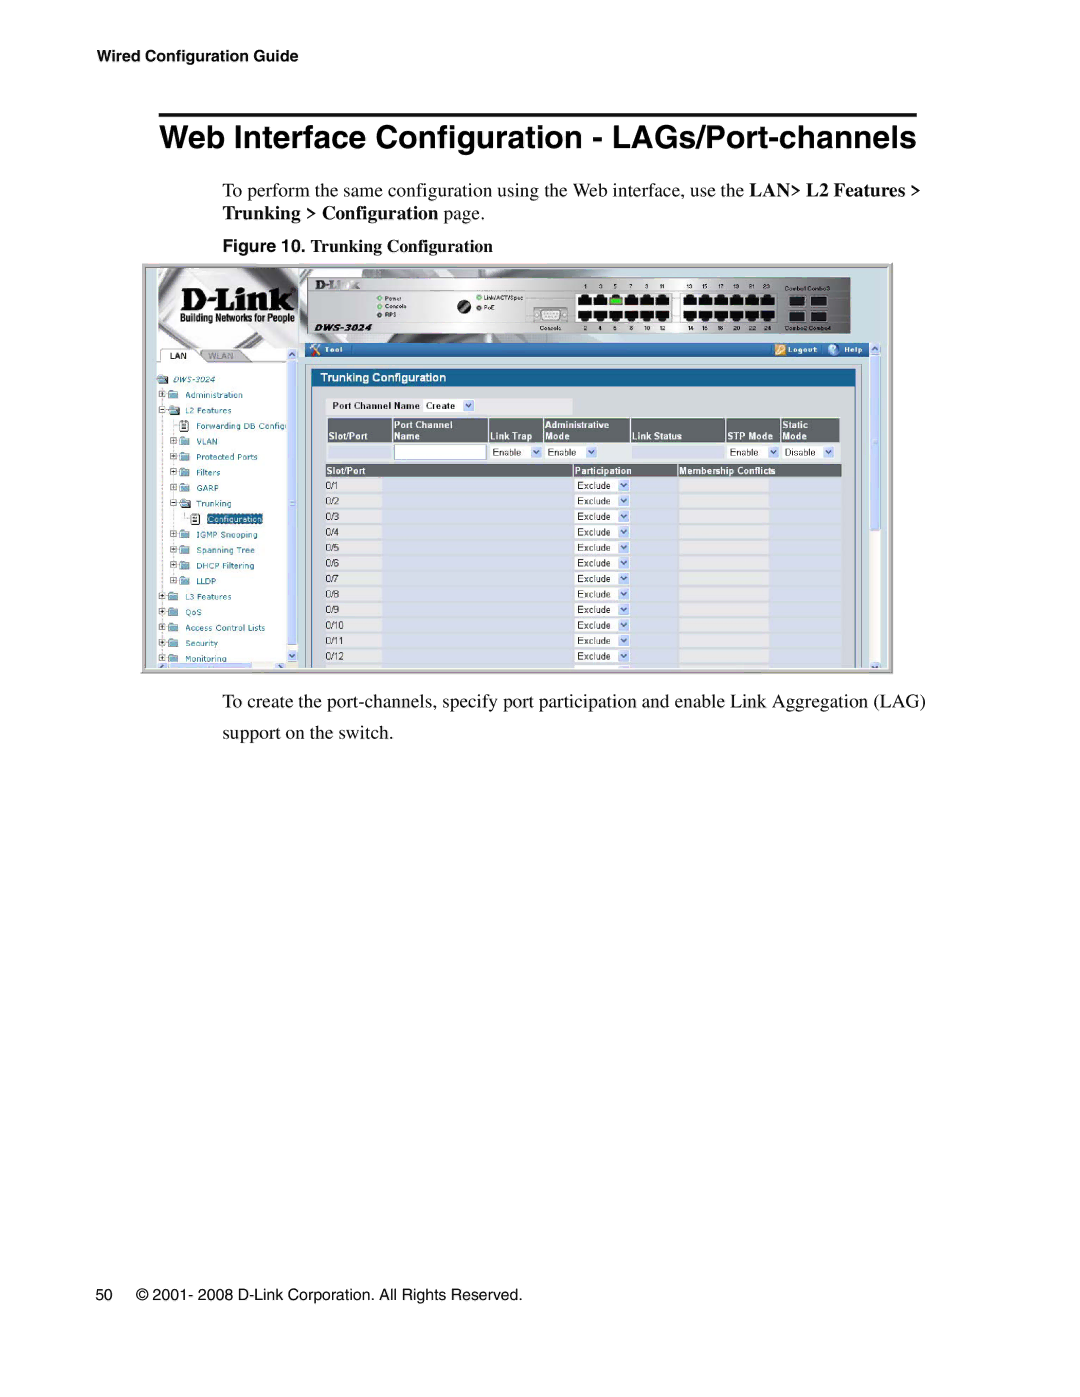 D-Link DWS-3000 manual Web Interface Configuration LAGs/Port-channels, Trunking Configuration 